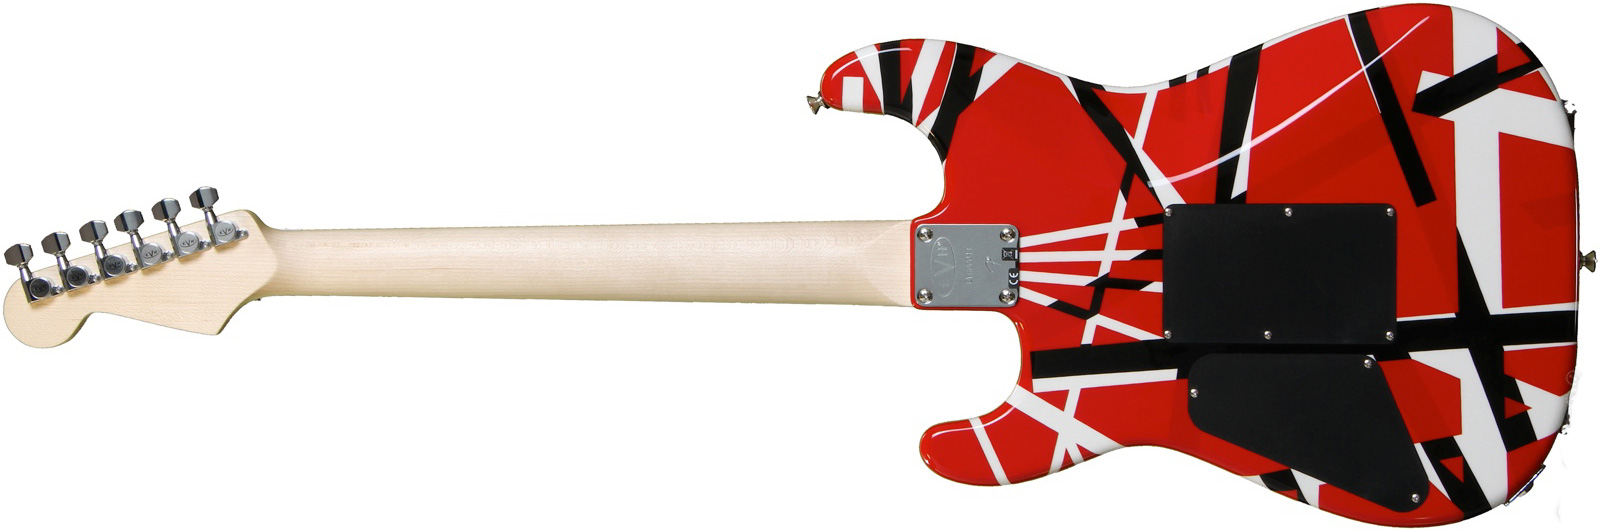 Evh Striped Series - Red With Black Stripes - Guitarra eléctrica con forma de str. - Variation 3